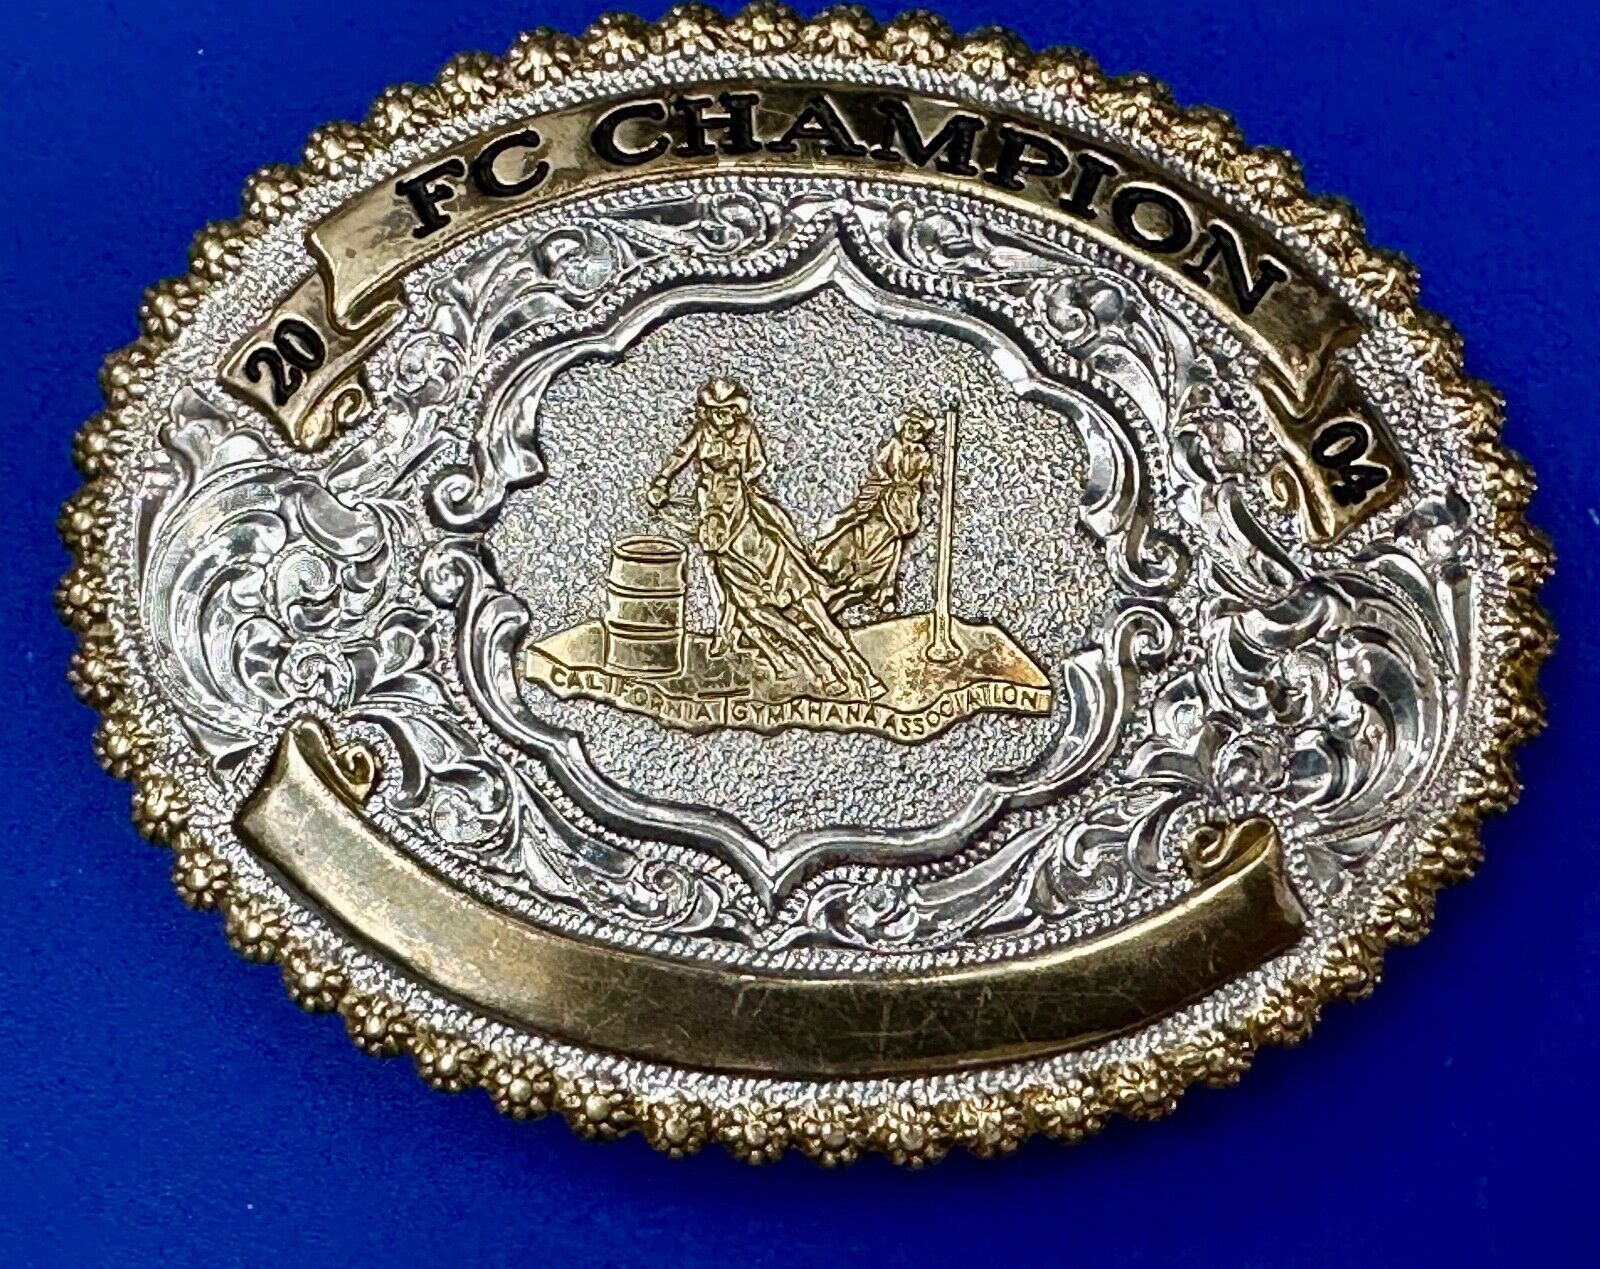 FC Champion 2004 Rodeo Cowboys barrel racing belt buckle California GYMKHANA